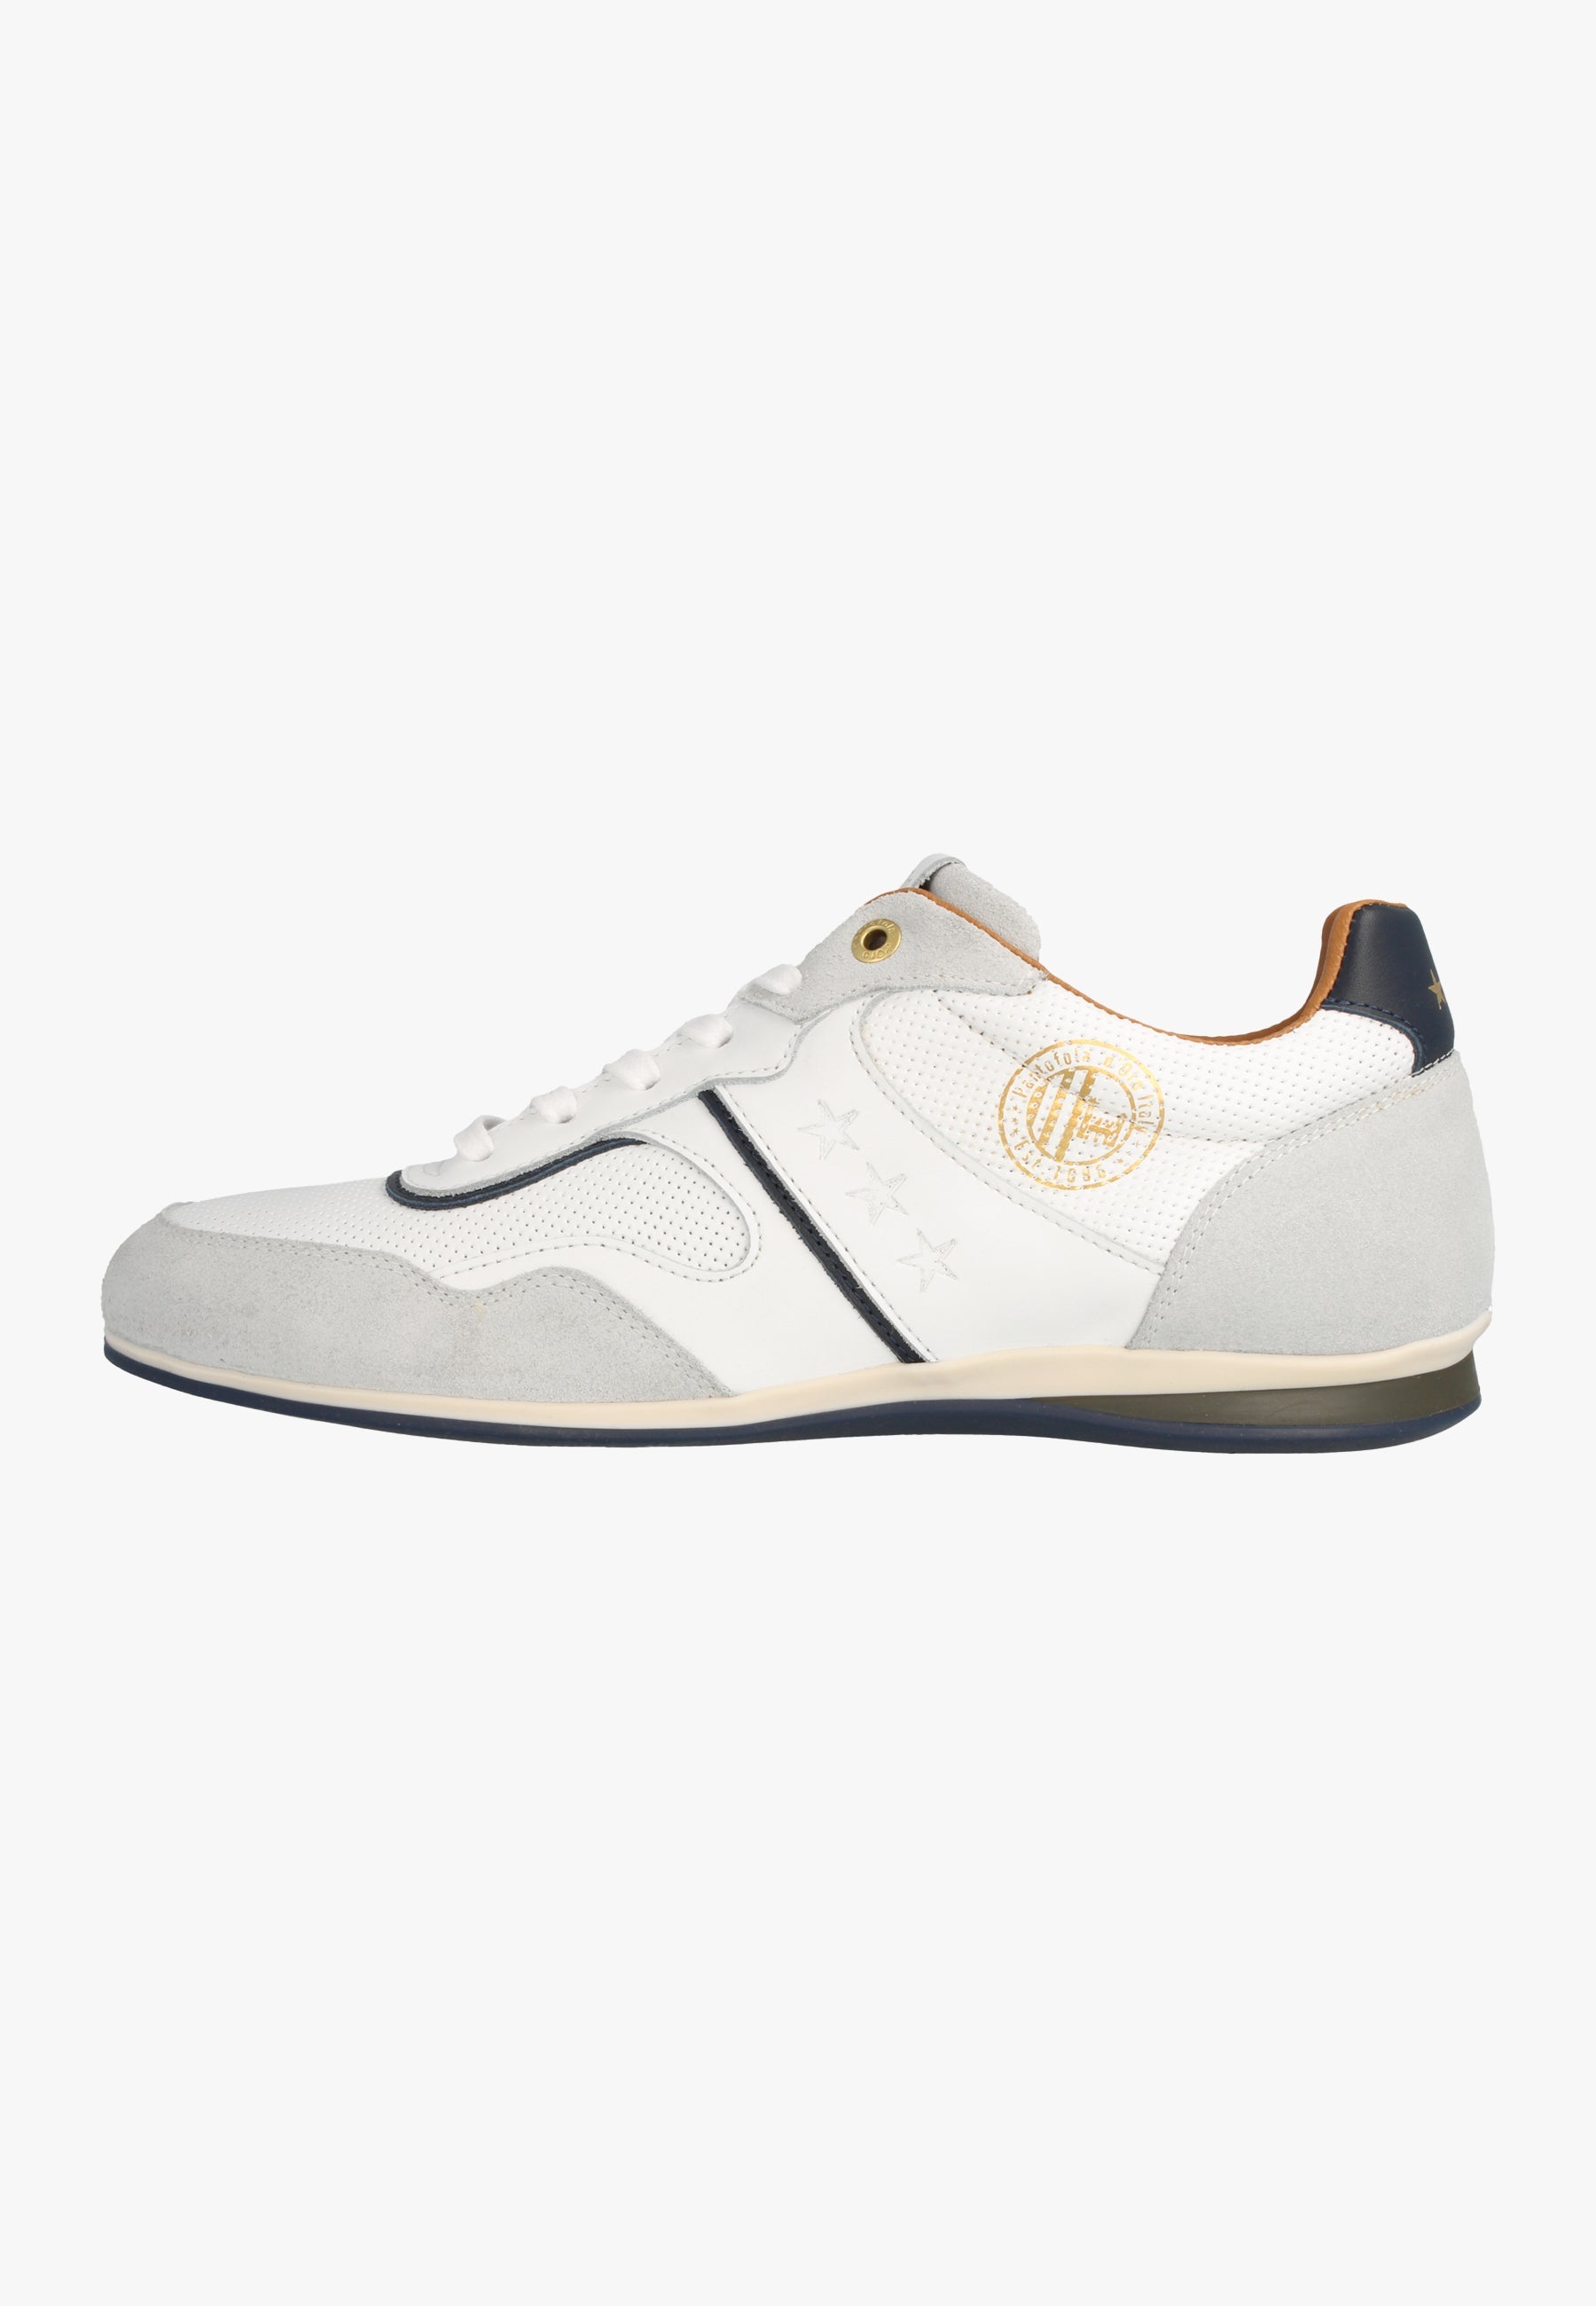 Perano Low in Bright White Sneakers Pantofola d'Oro   